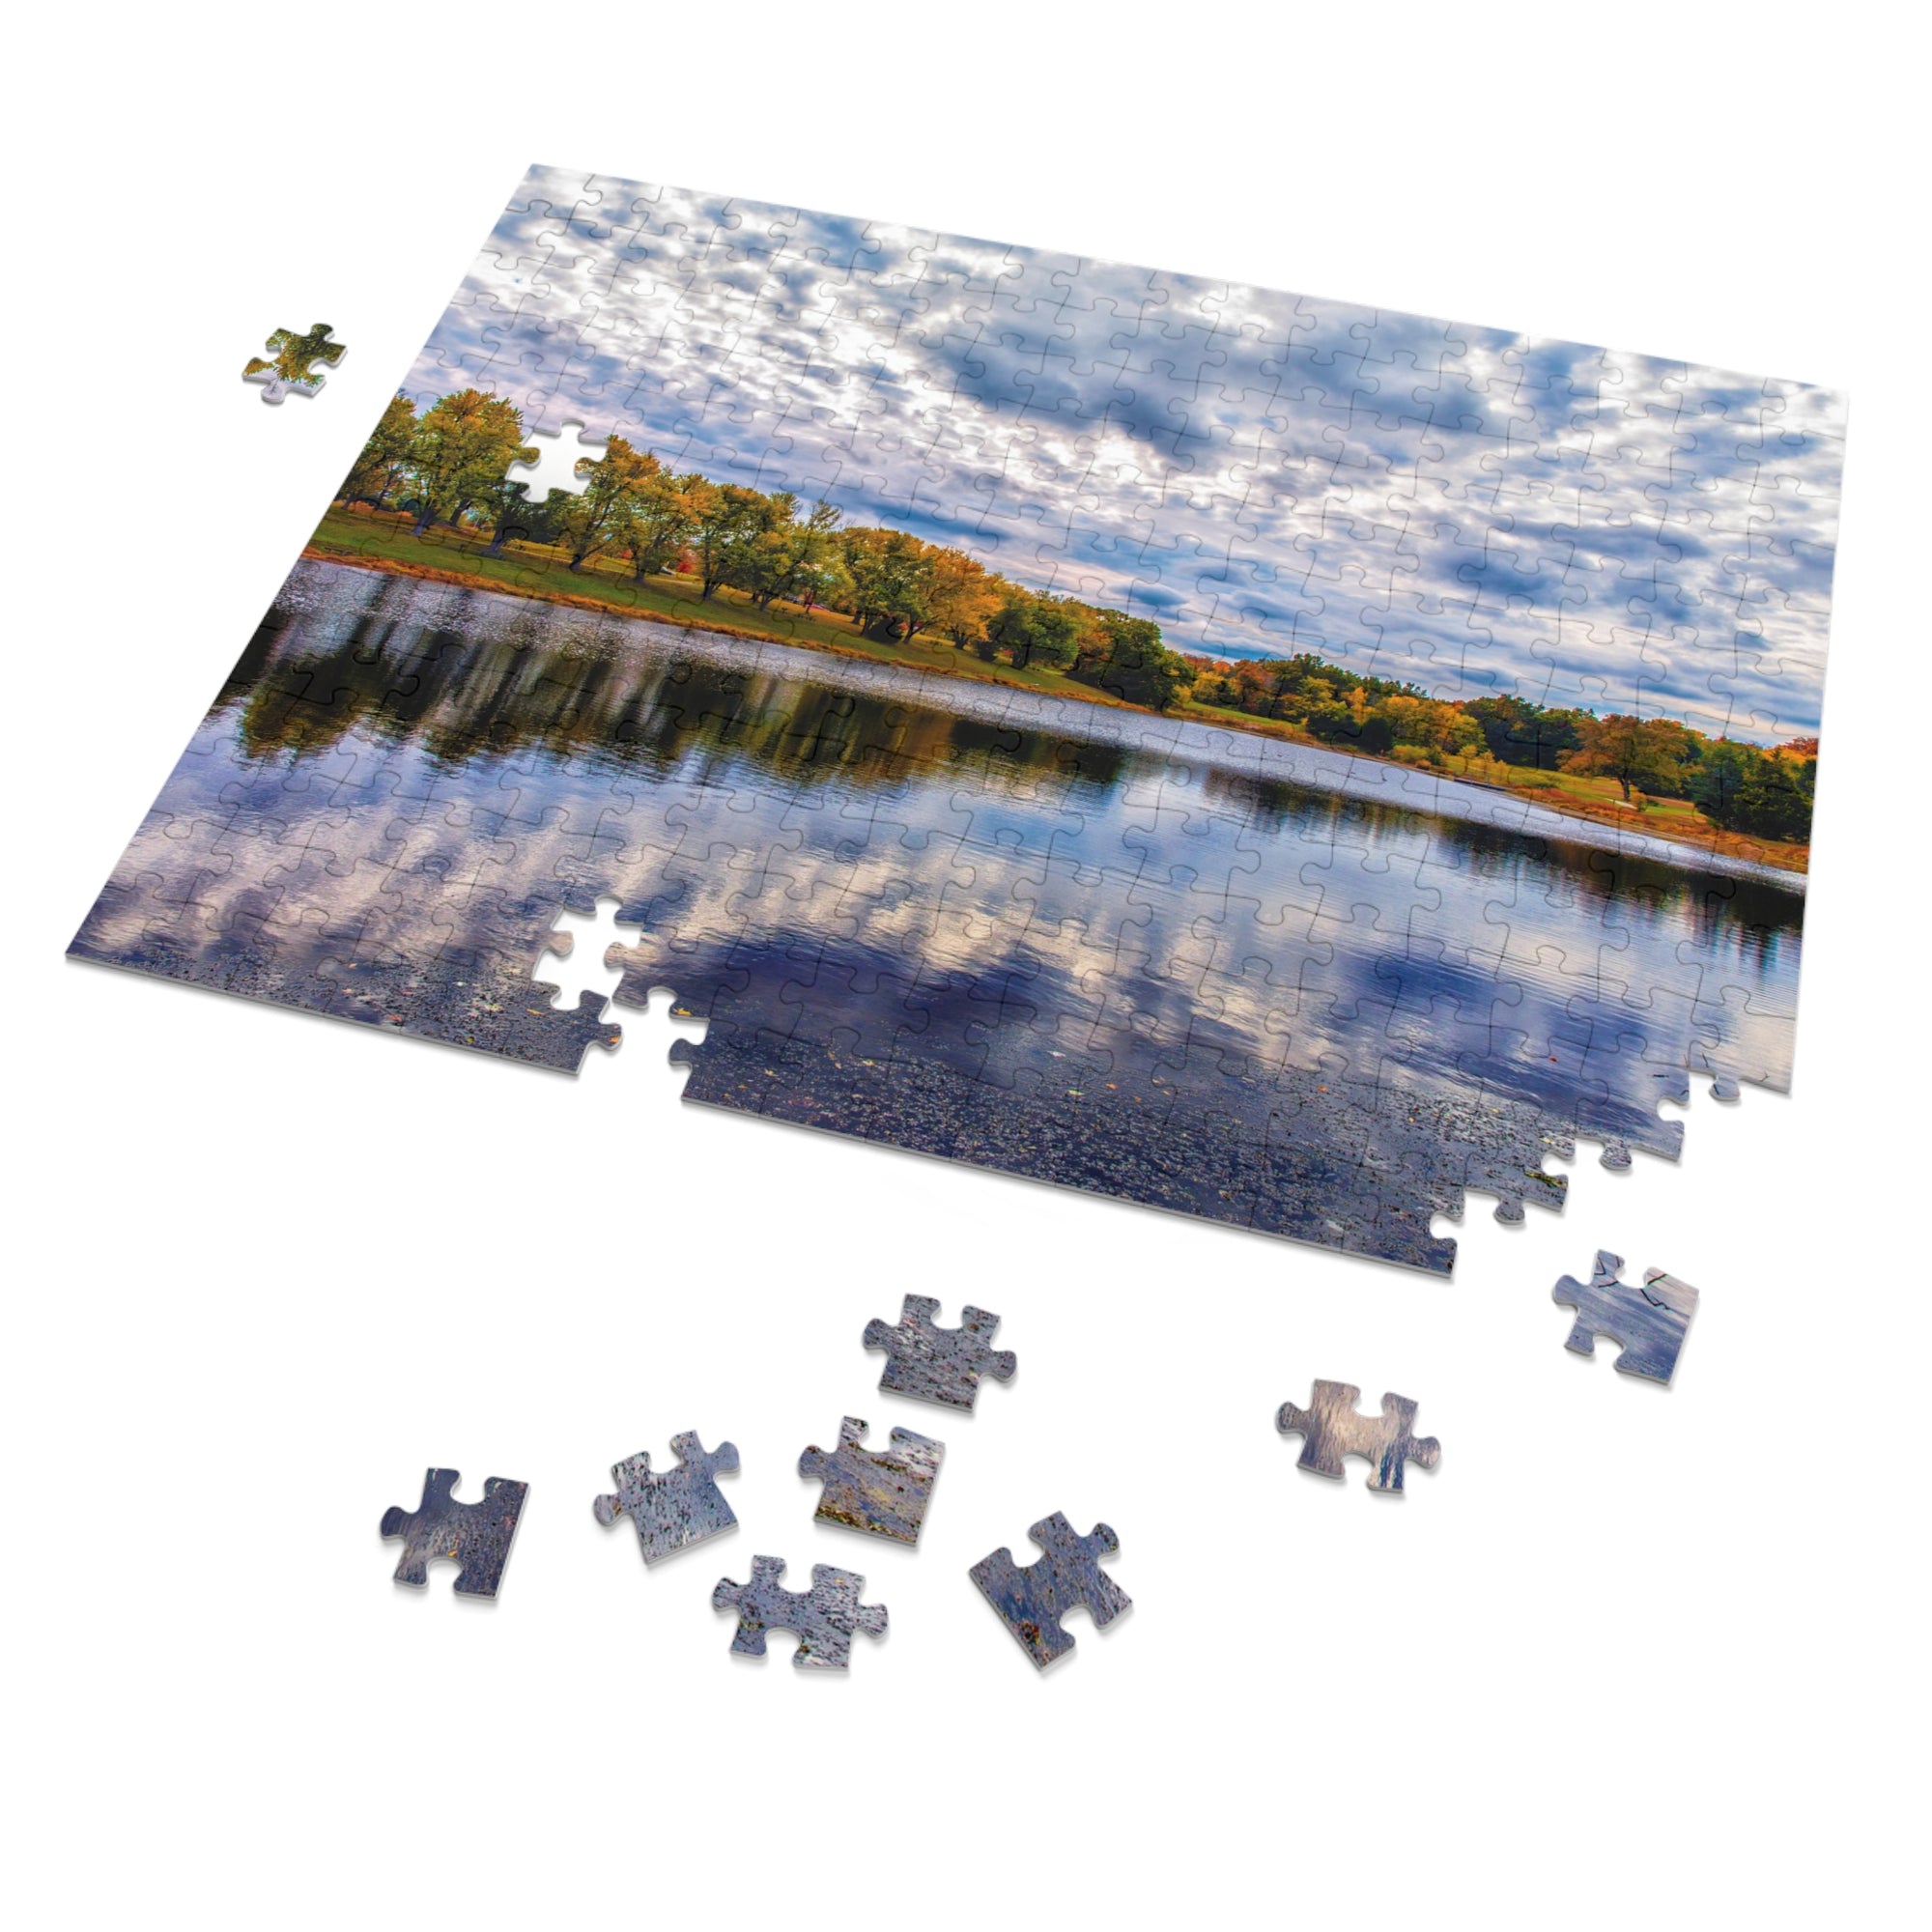 Drama in Autumn Skies Jigsaw Puzzle